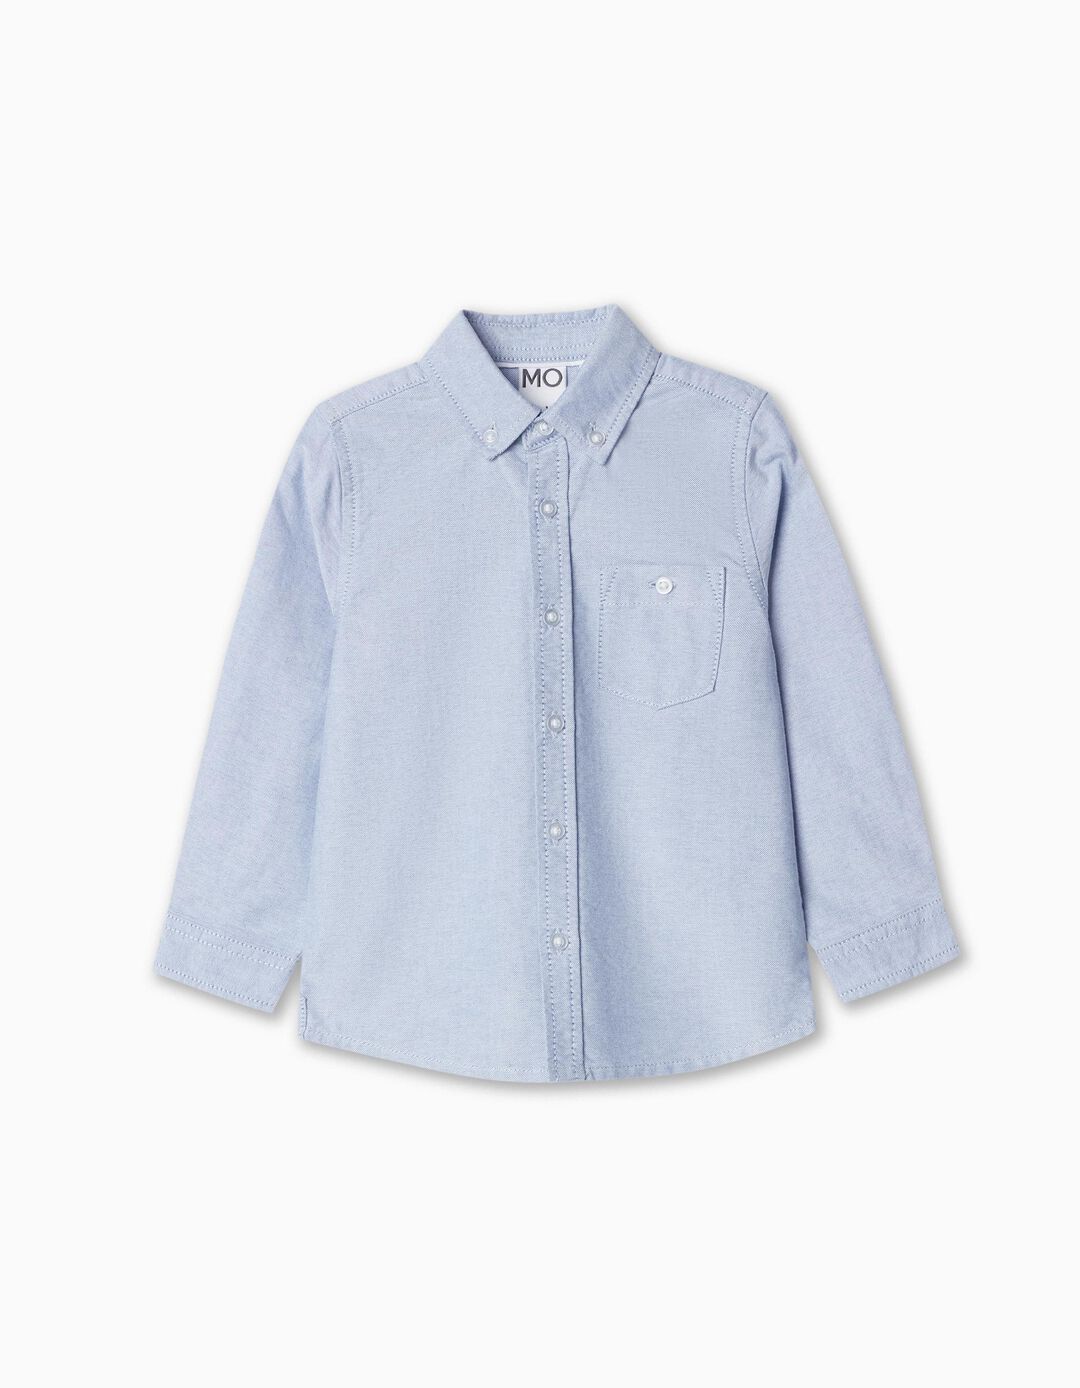 Oxford Long Sleeve Shirt, Baby Boy, Light Blue